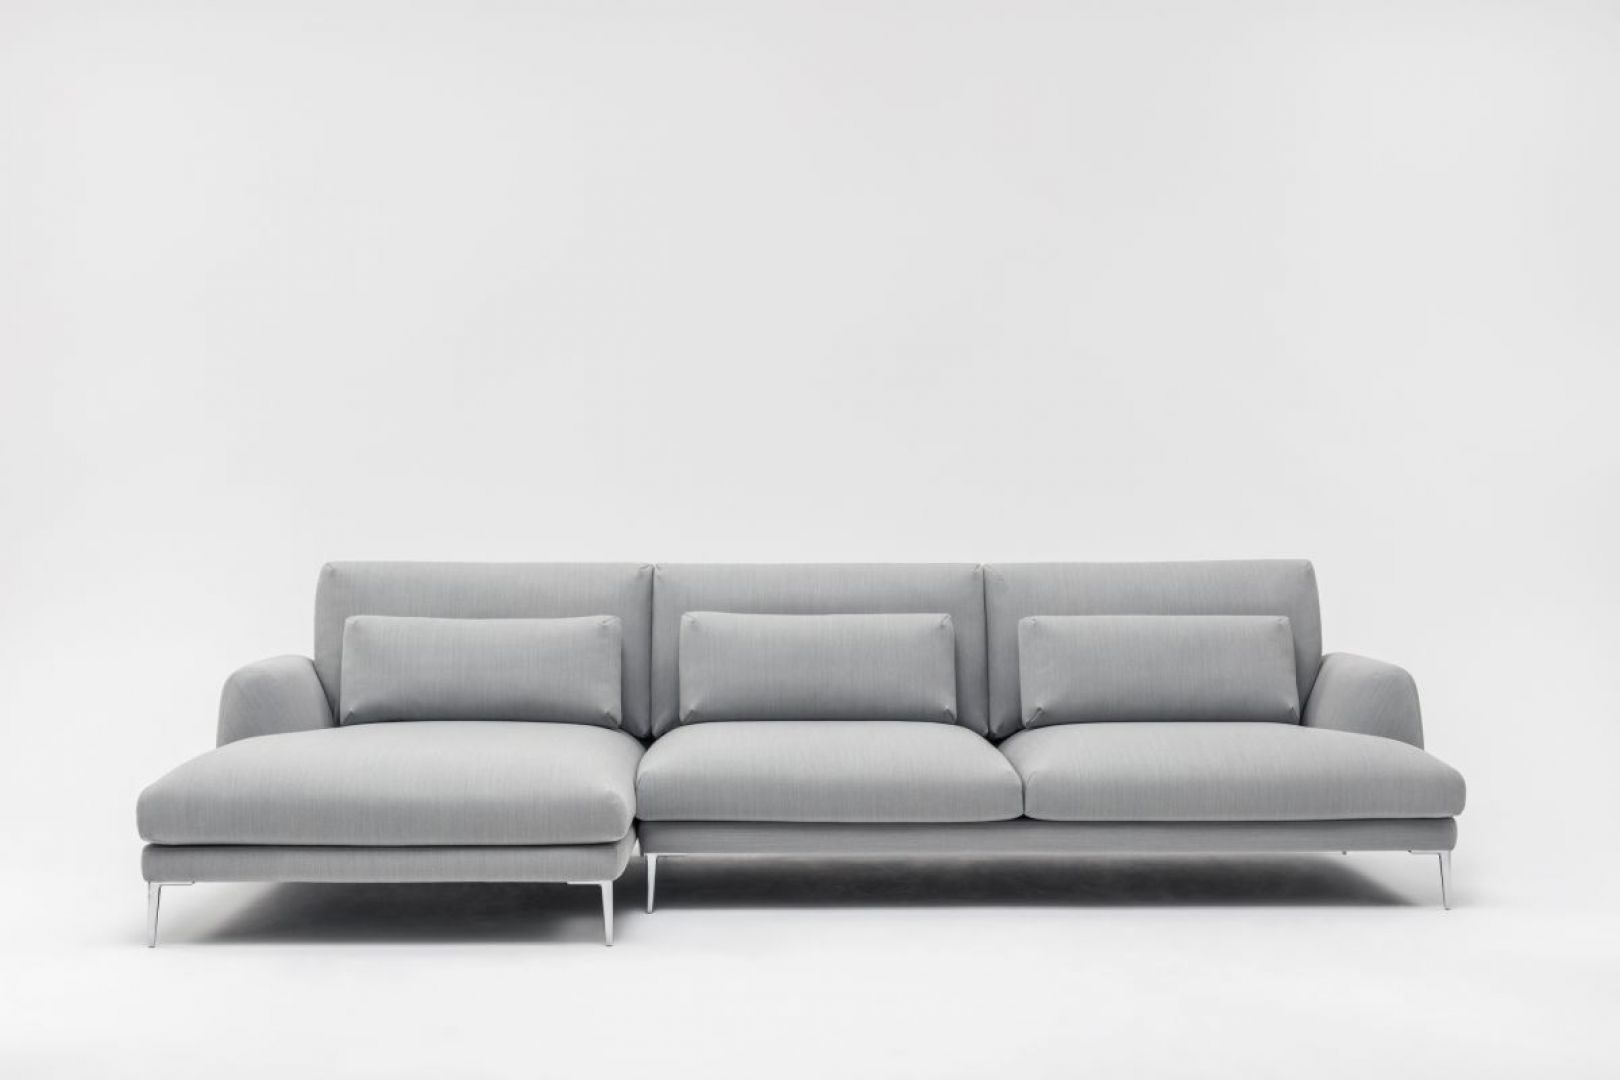 Sofa Classic, projekt Krystian Kowalski dla Comforty. Fot. Comforty